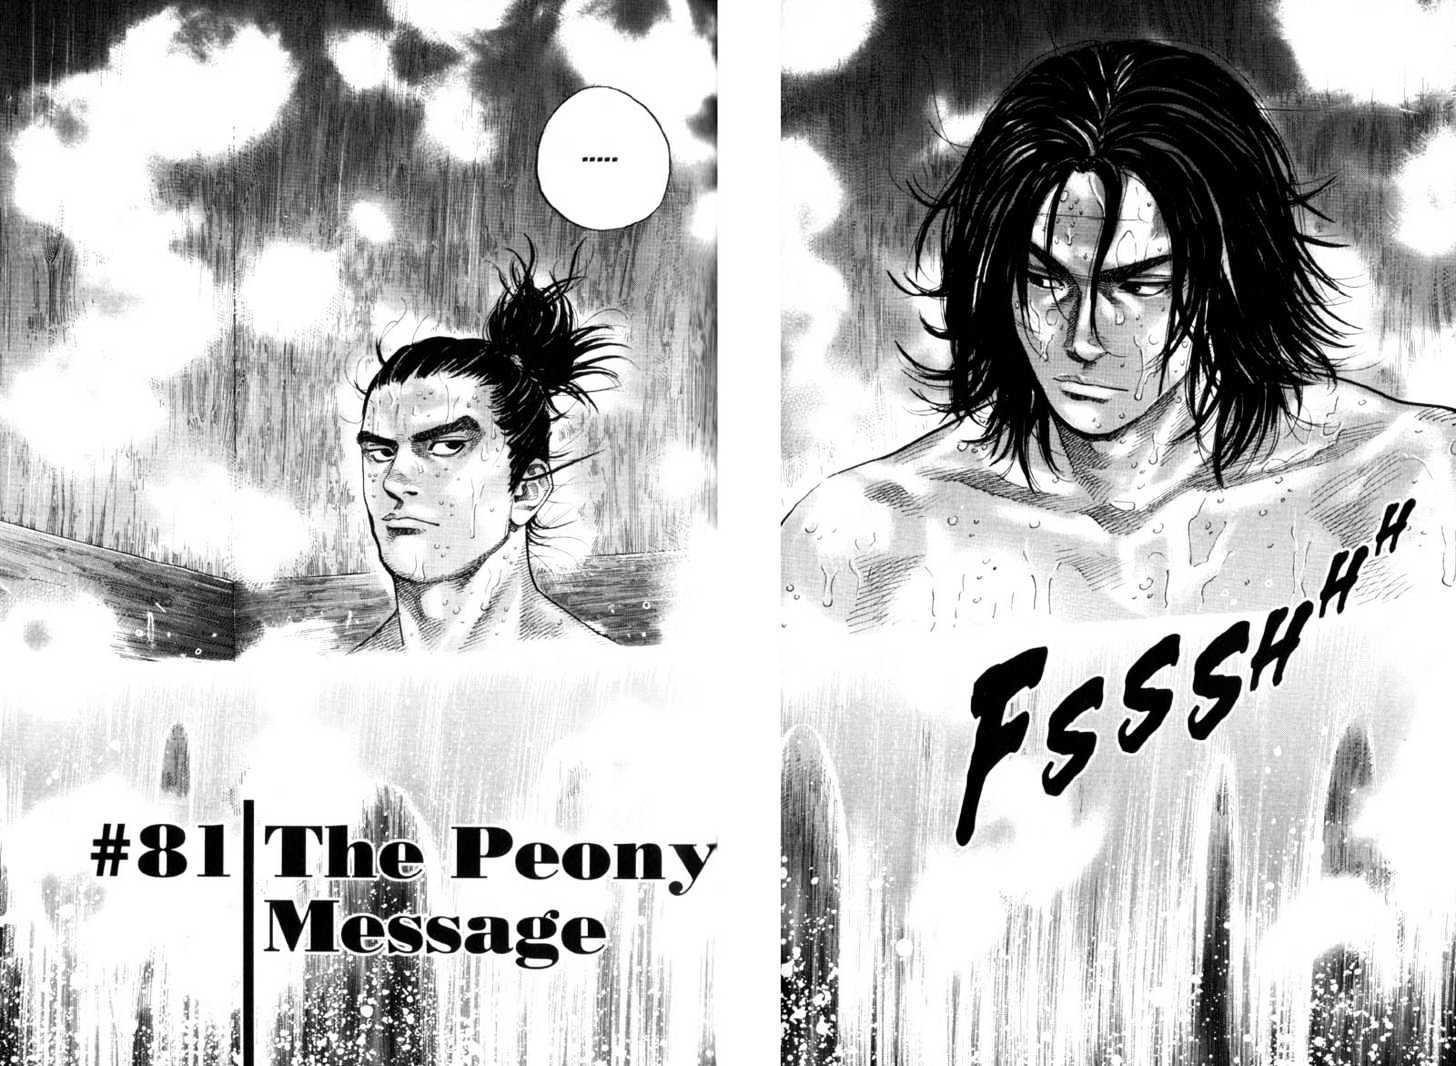 Vagabond Vol.9 Chapter 81 : The Peony Message page 2 - Mangakakalot